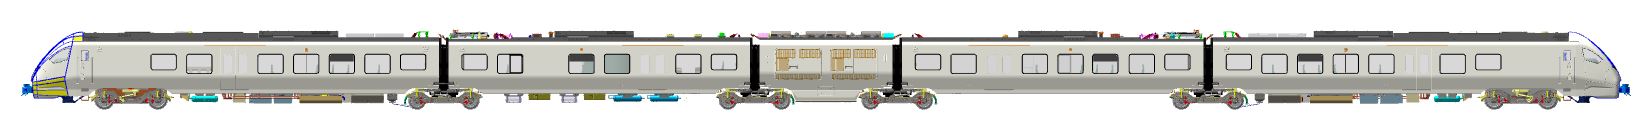 Stephenson's Rocket Train Pack